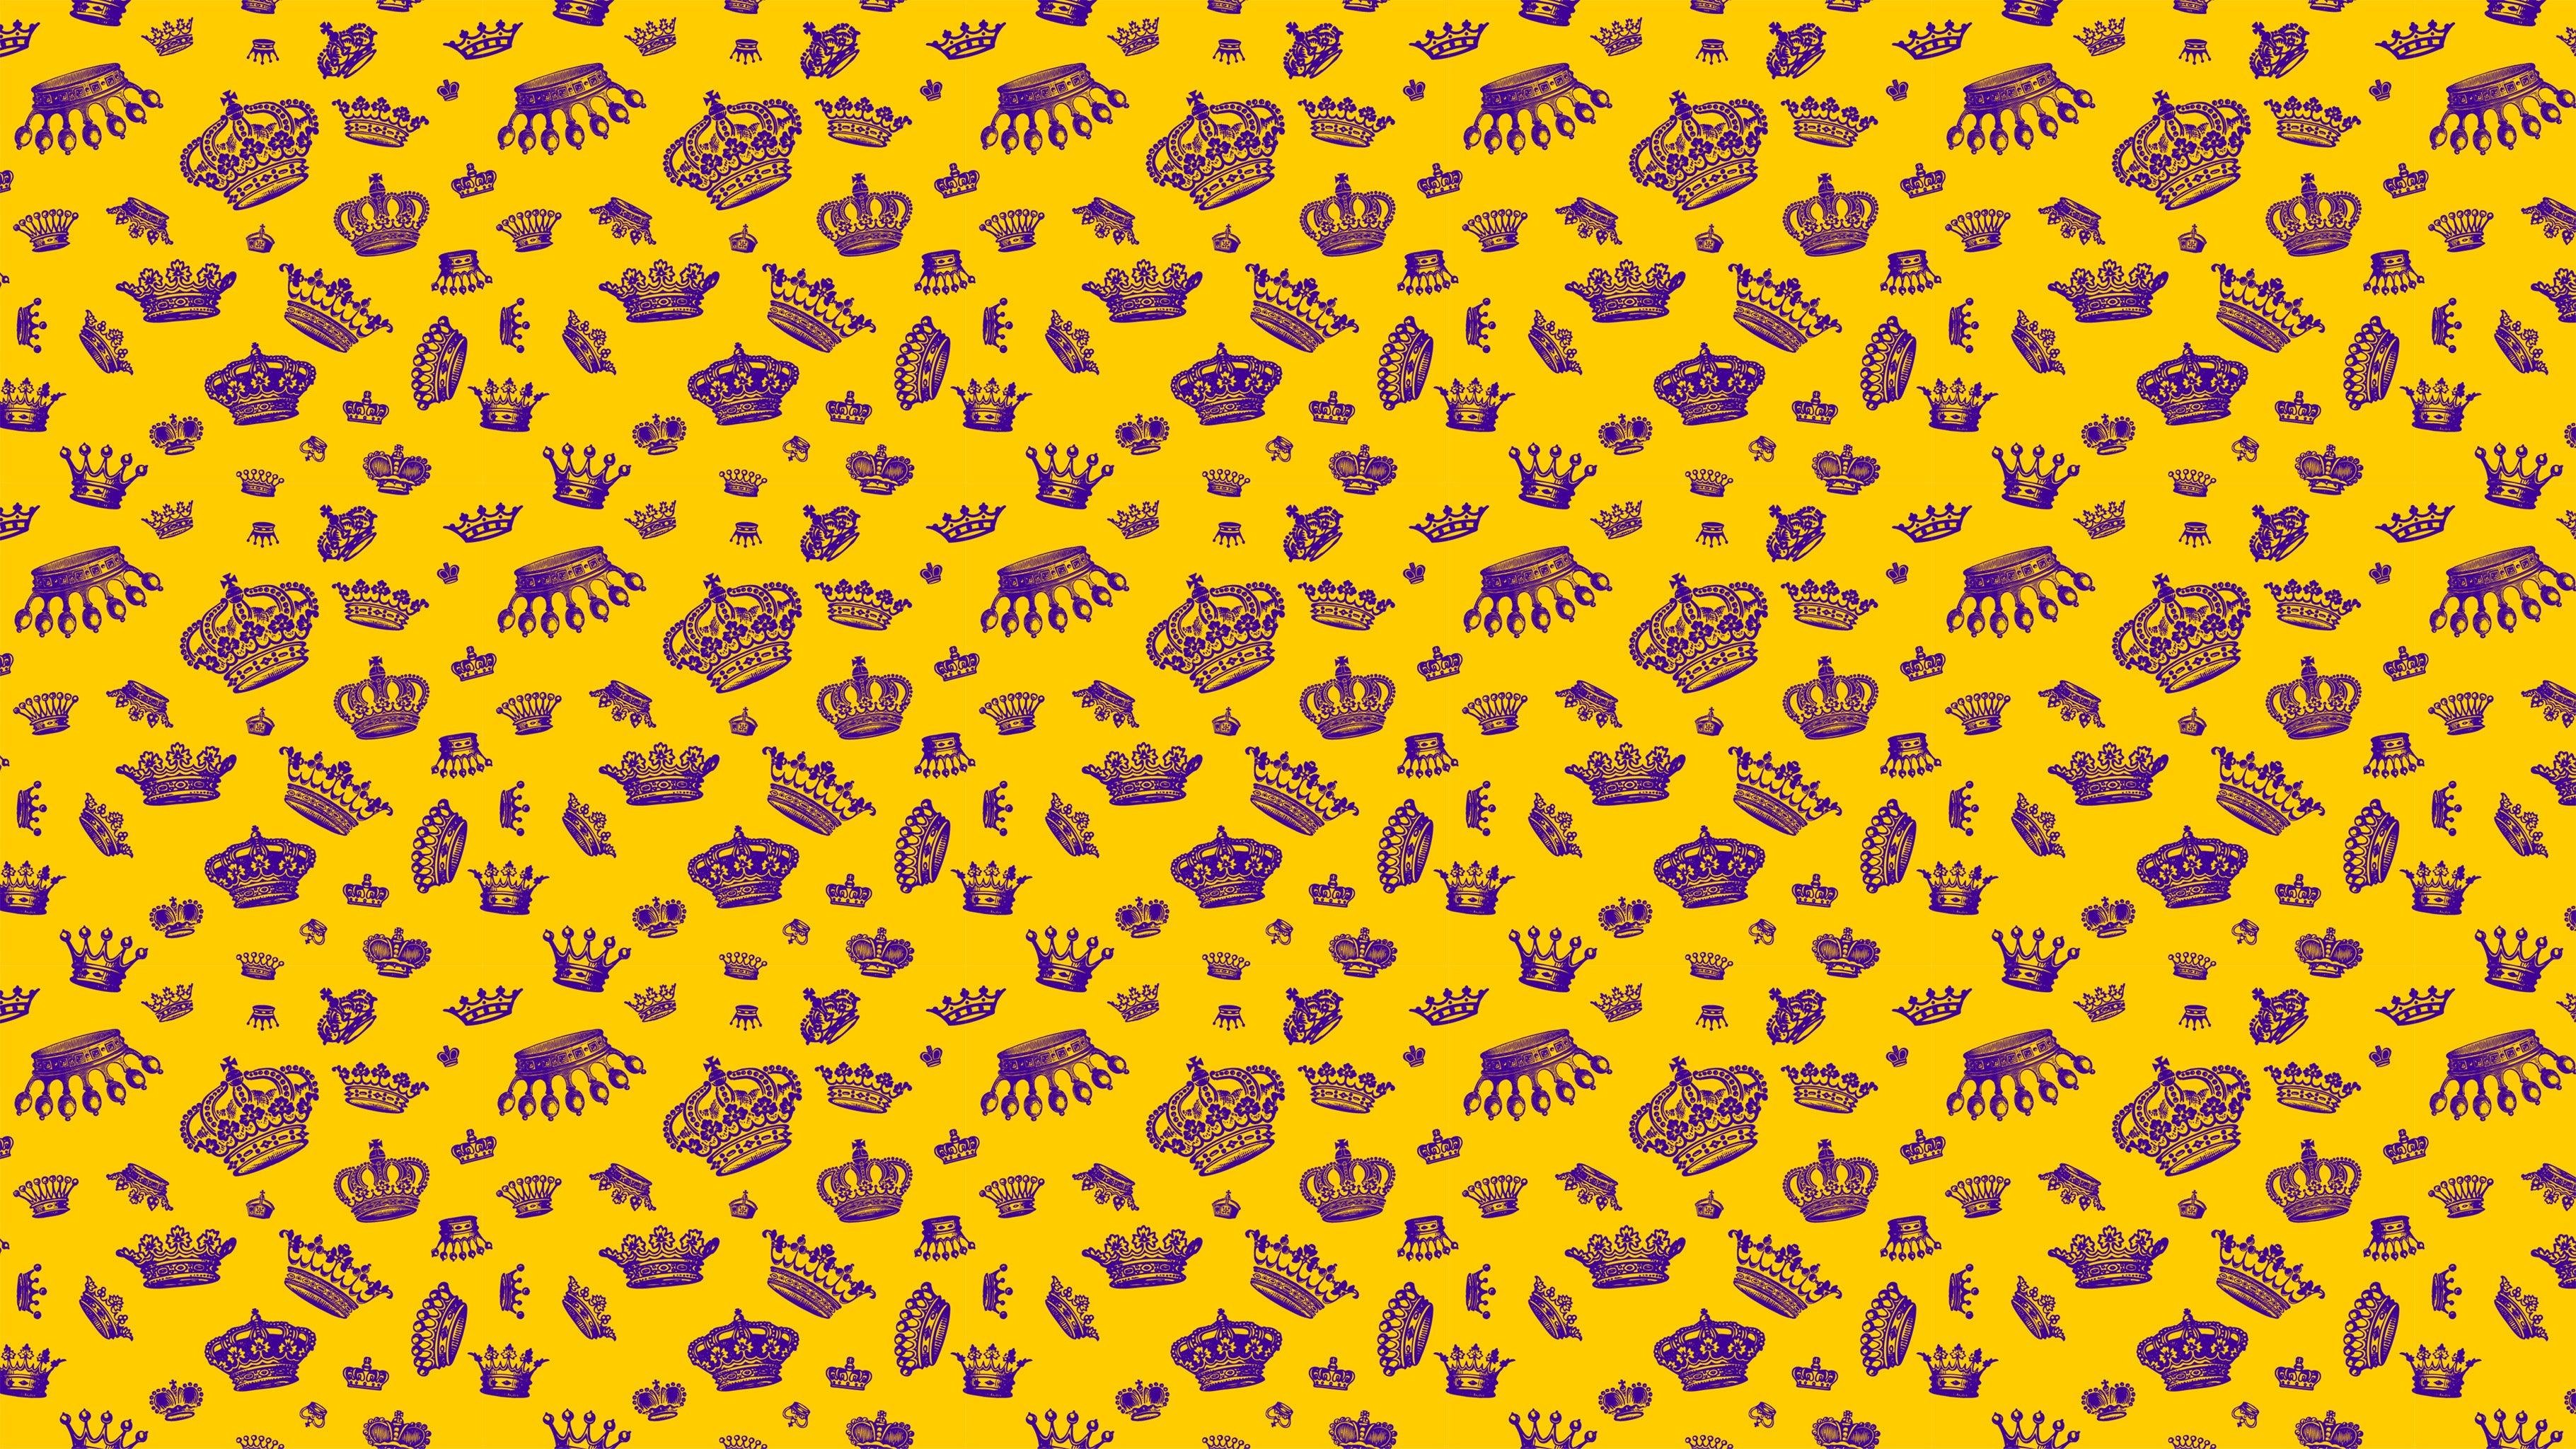 Royal Crowns in Purple on Yellow by Studio Ten Design